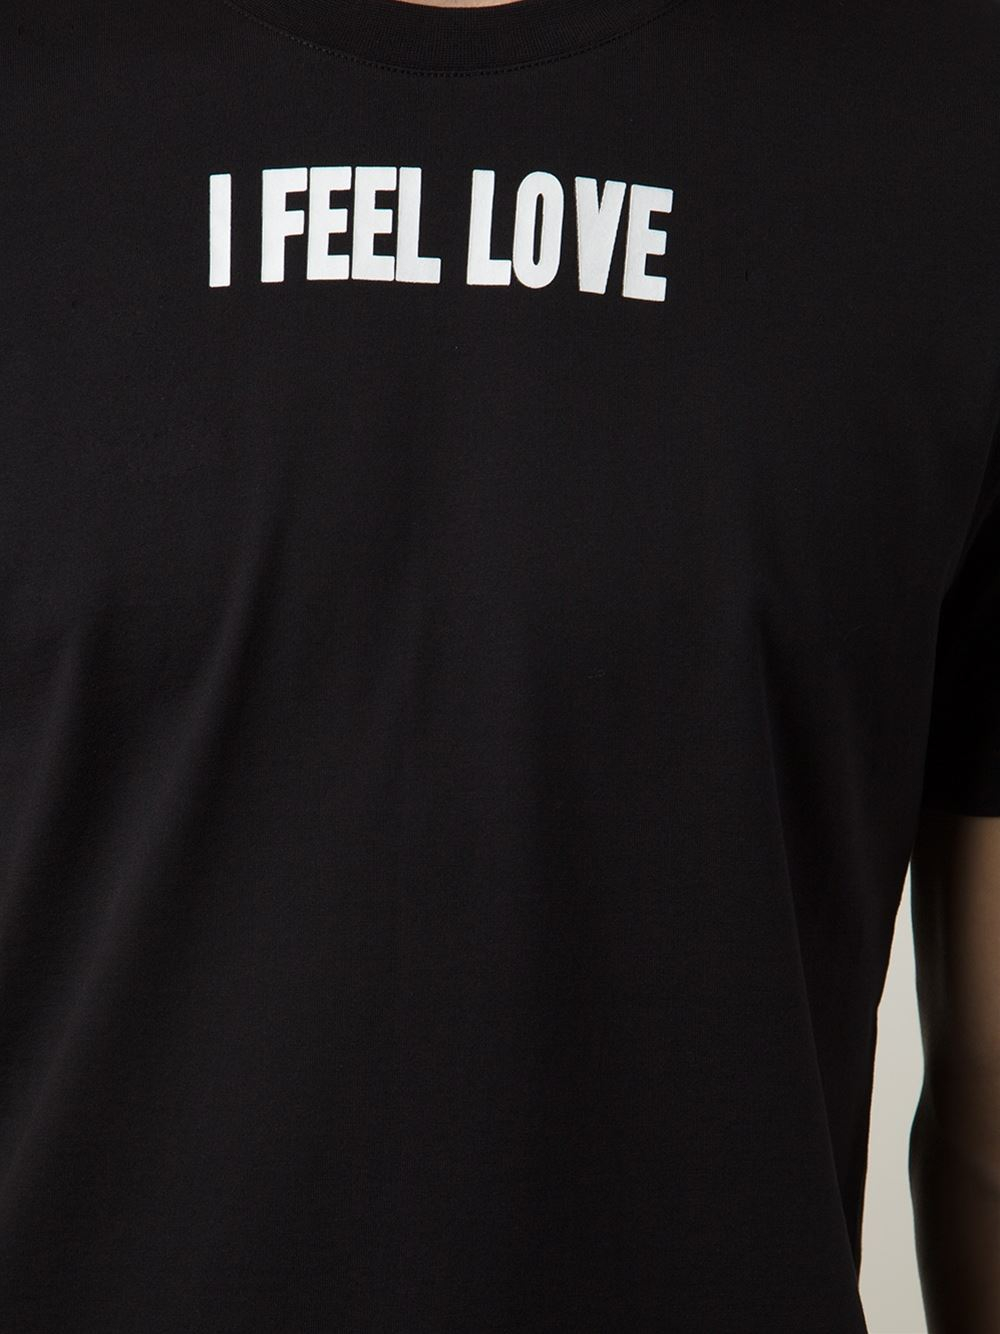 i feel love t shirt